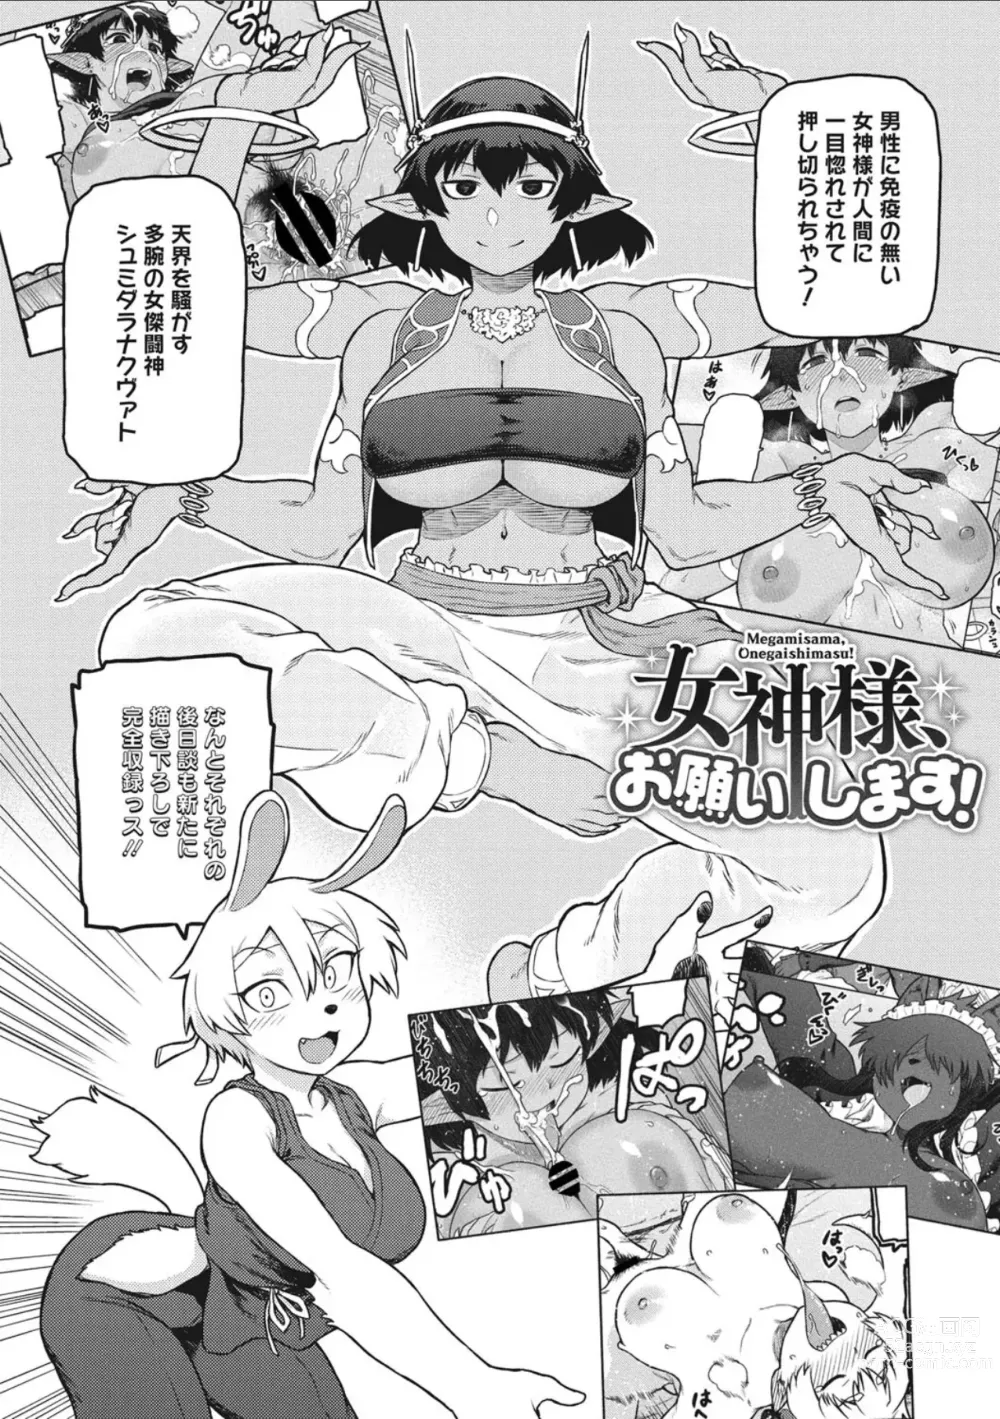 Page 149 of manga COMIC GAIRA Vol. 10